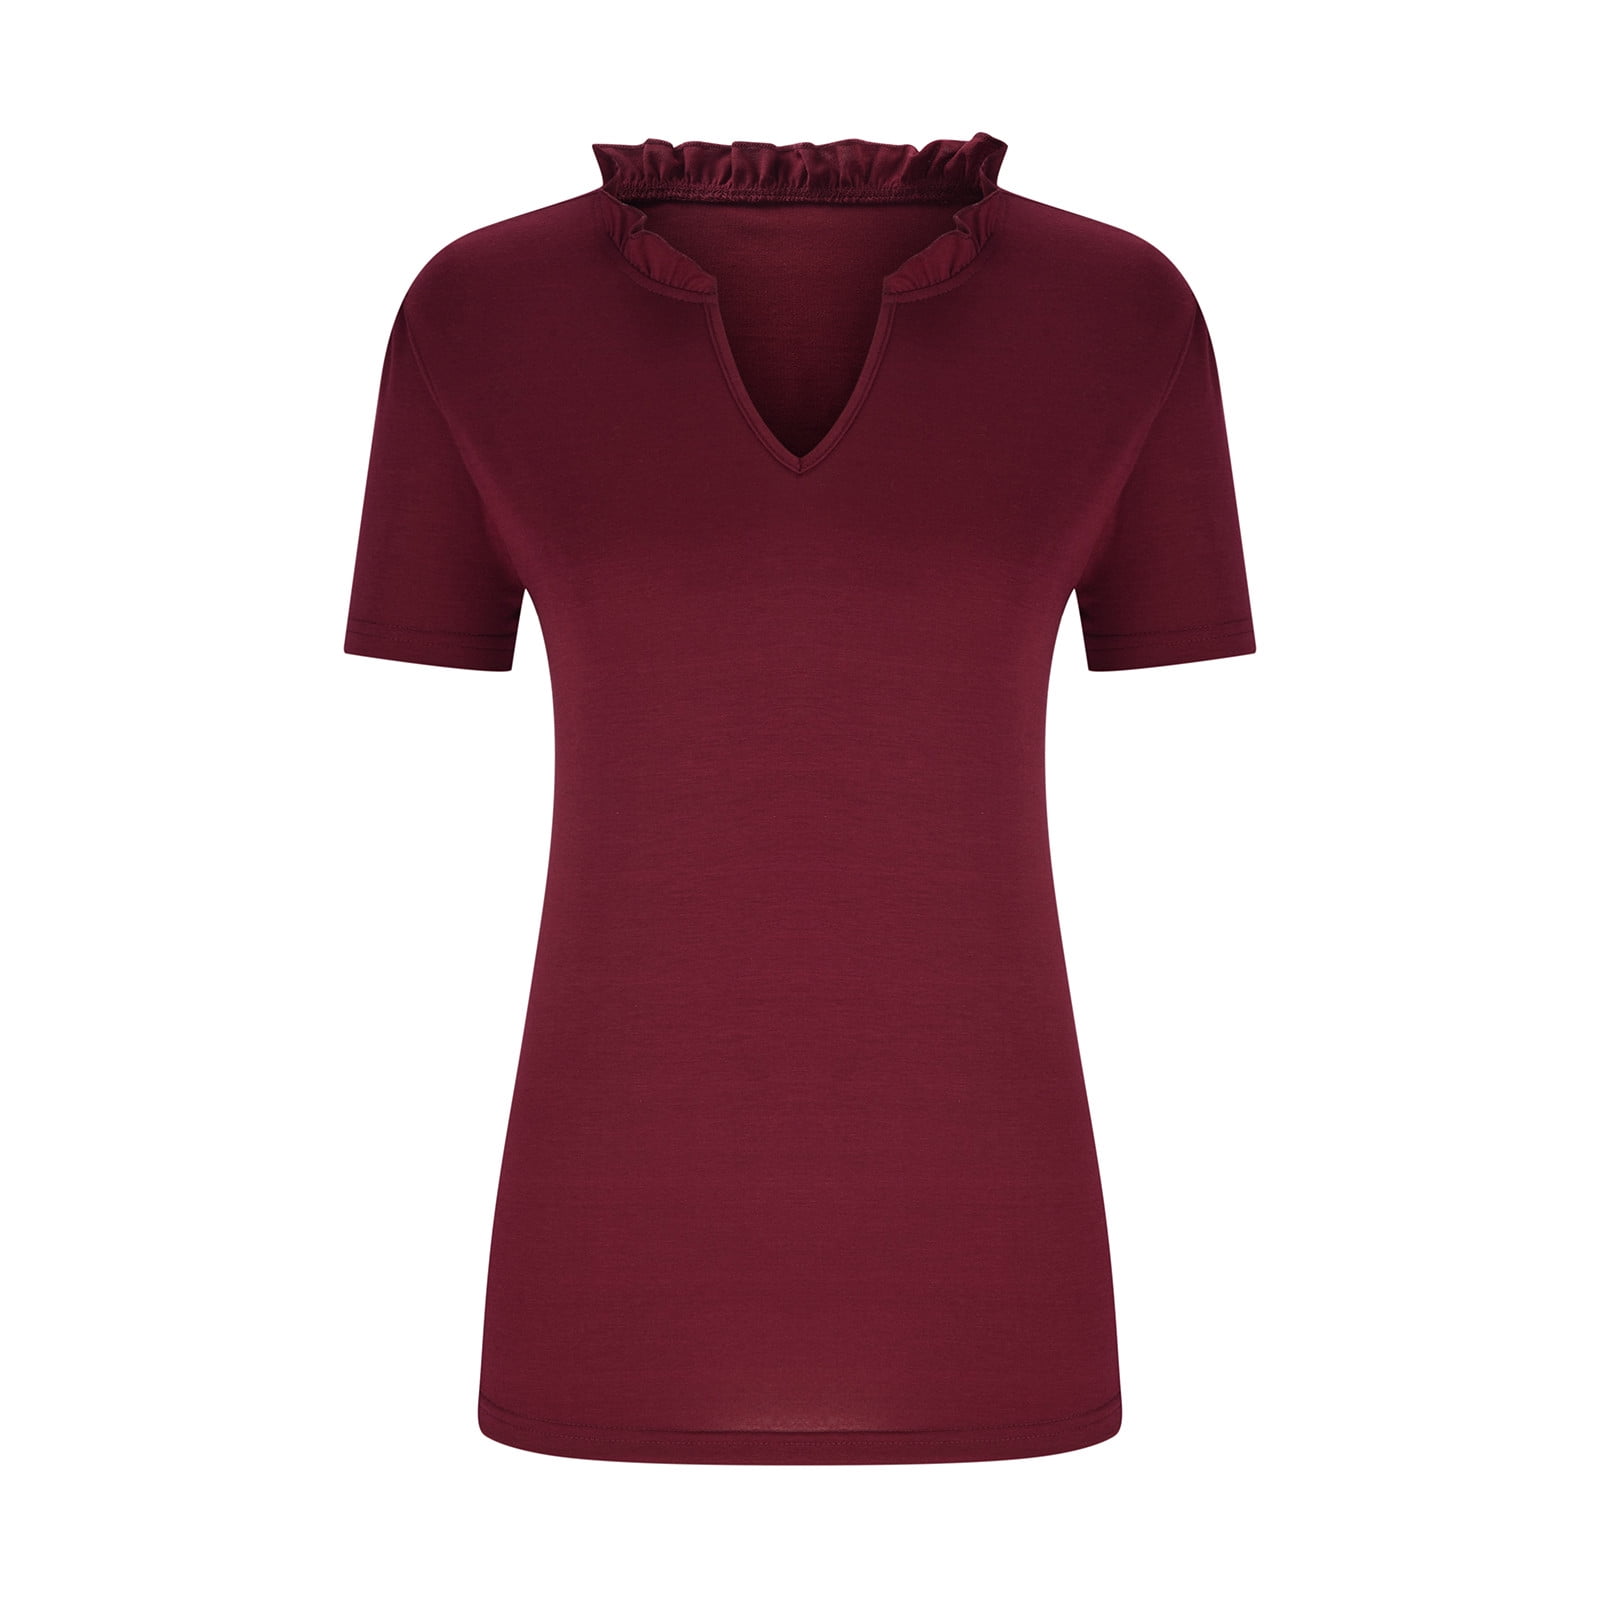 Kohls shirt top womens L grey burgundy orange v neck short sleeve